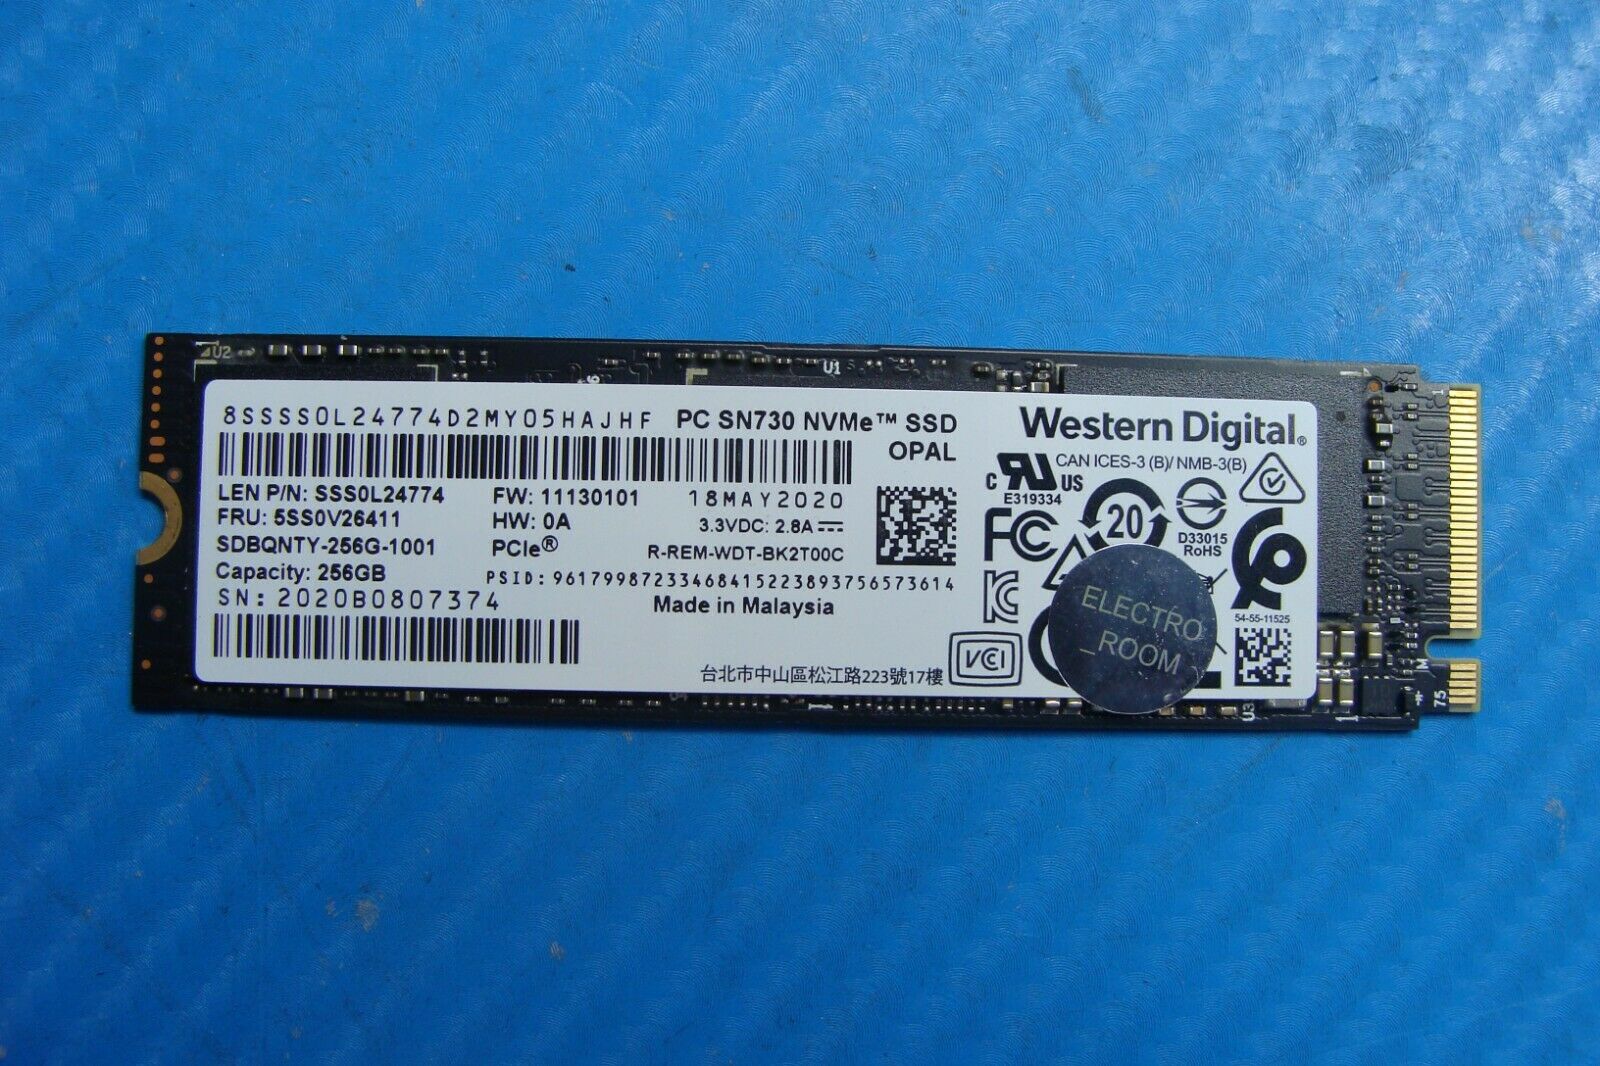 Lenovo X13 Yoga Western Digital 256Gb NVMe M.2 SSD sdbqnty-256g-1001 5ss0v26411 